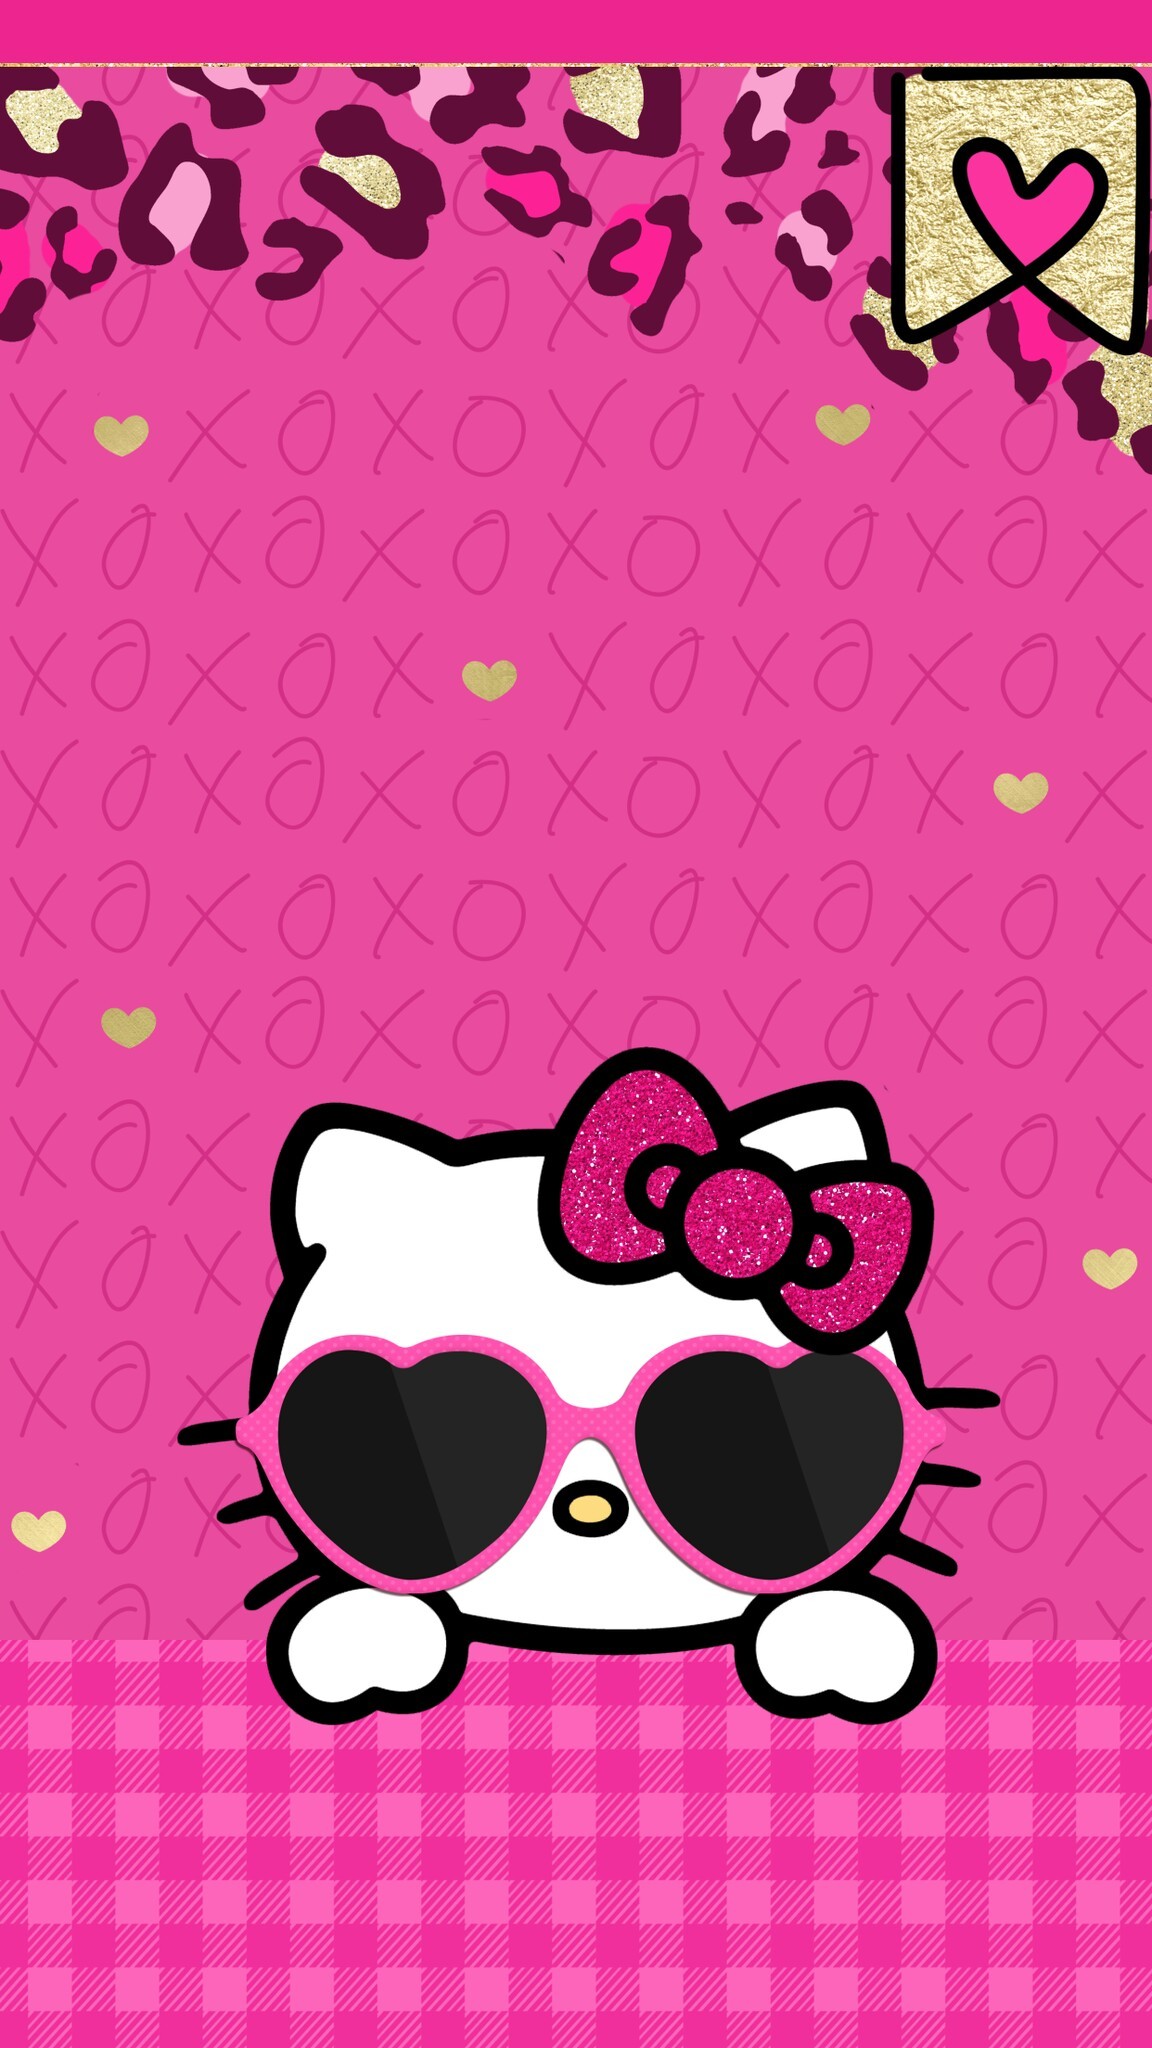 Hello Kitty x Skinnydip Wallpapers, Blog